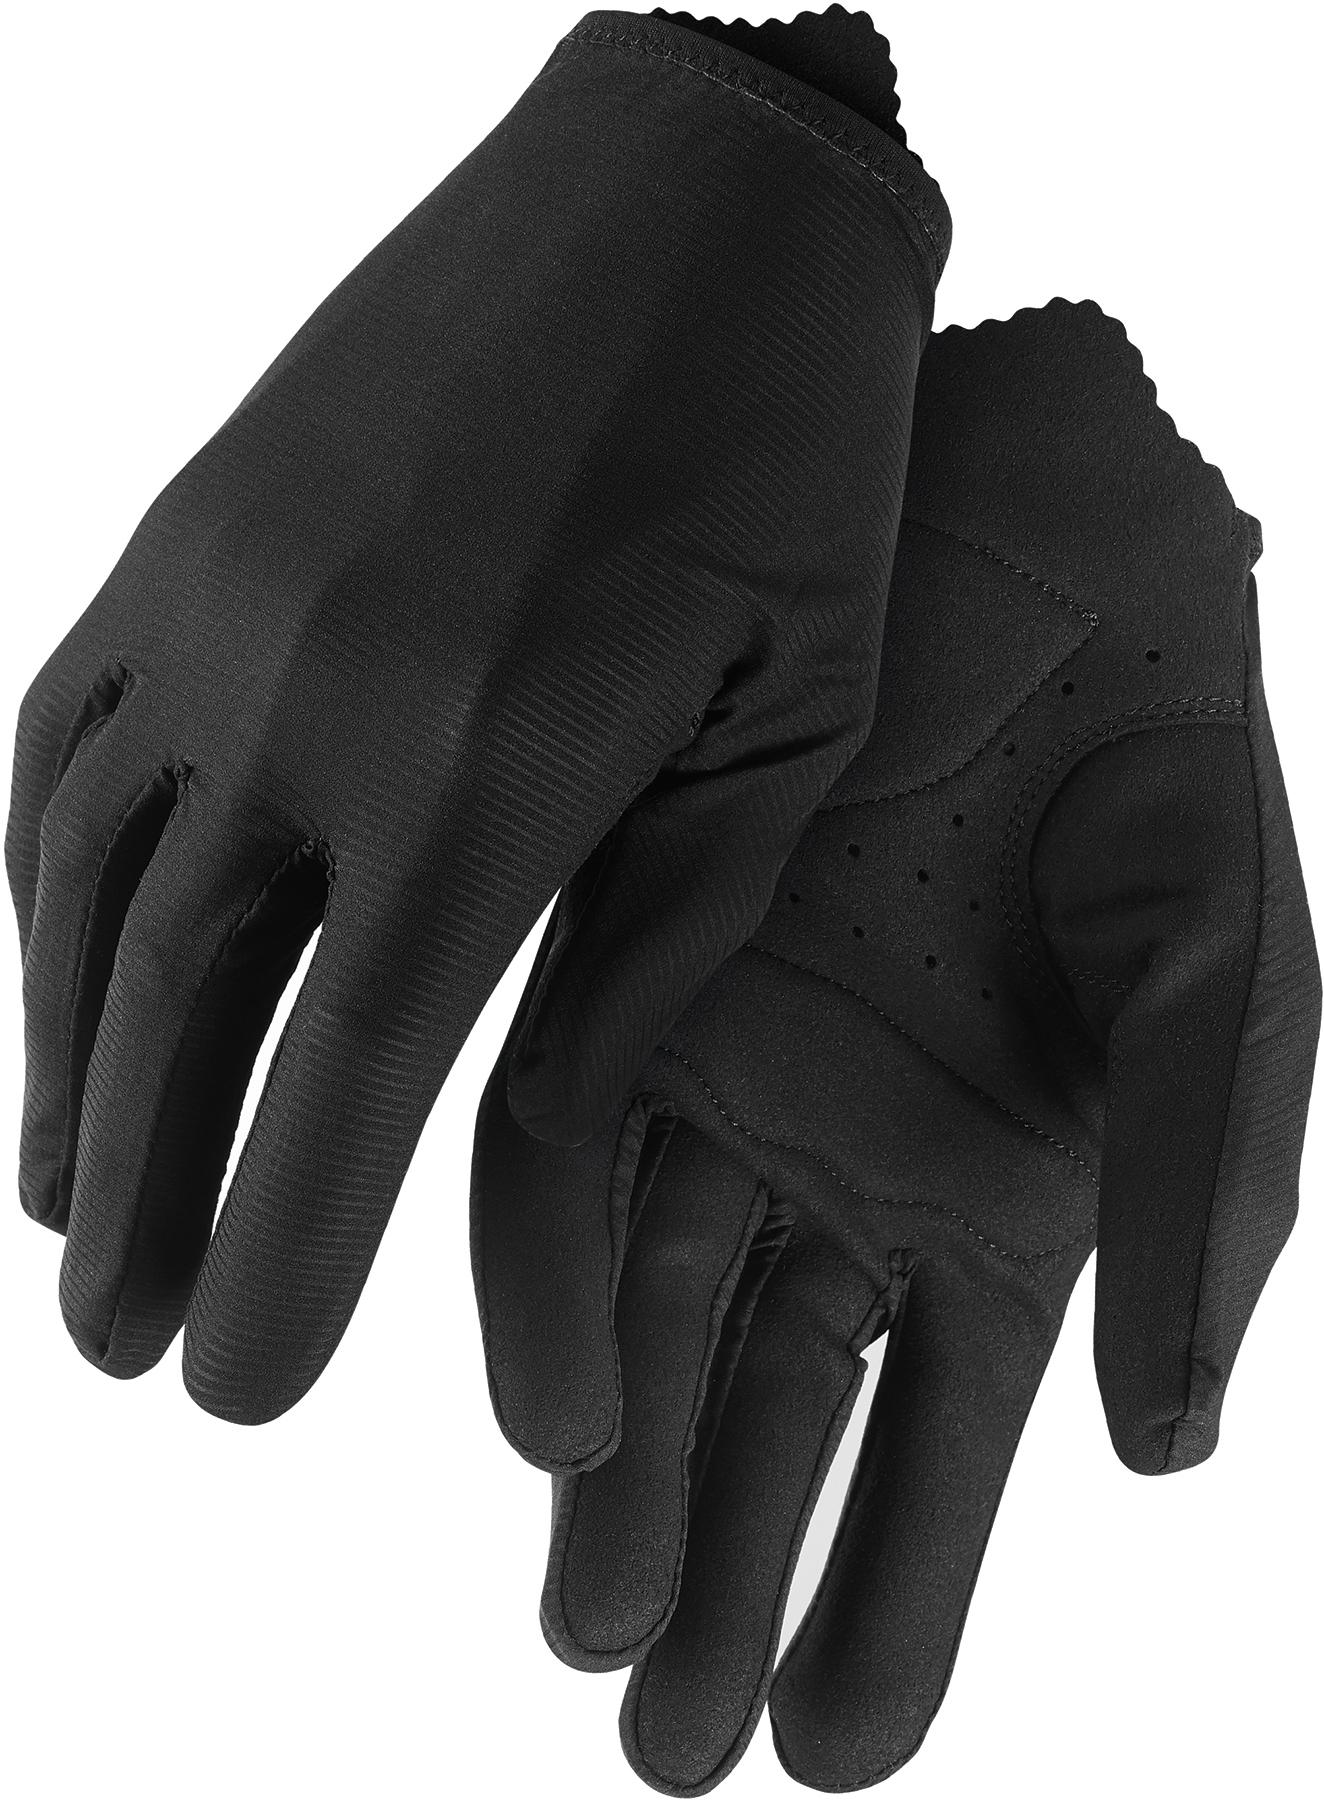 Assos Rs Aero Ff Gloves - Black Series